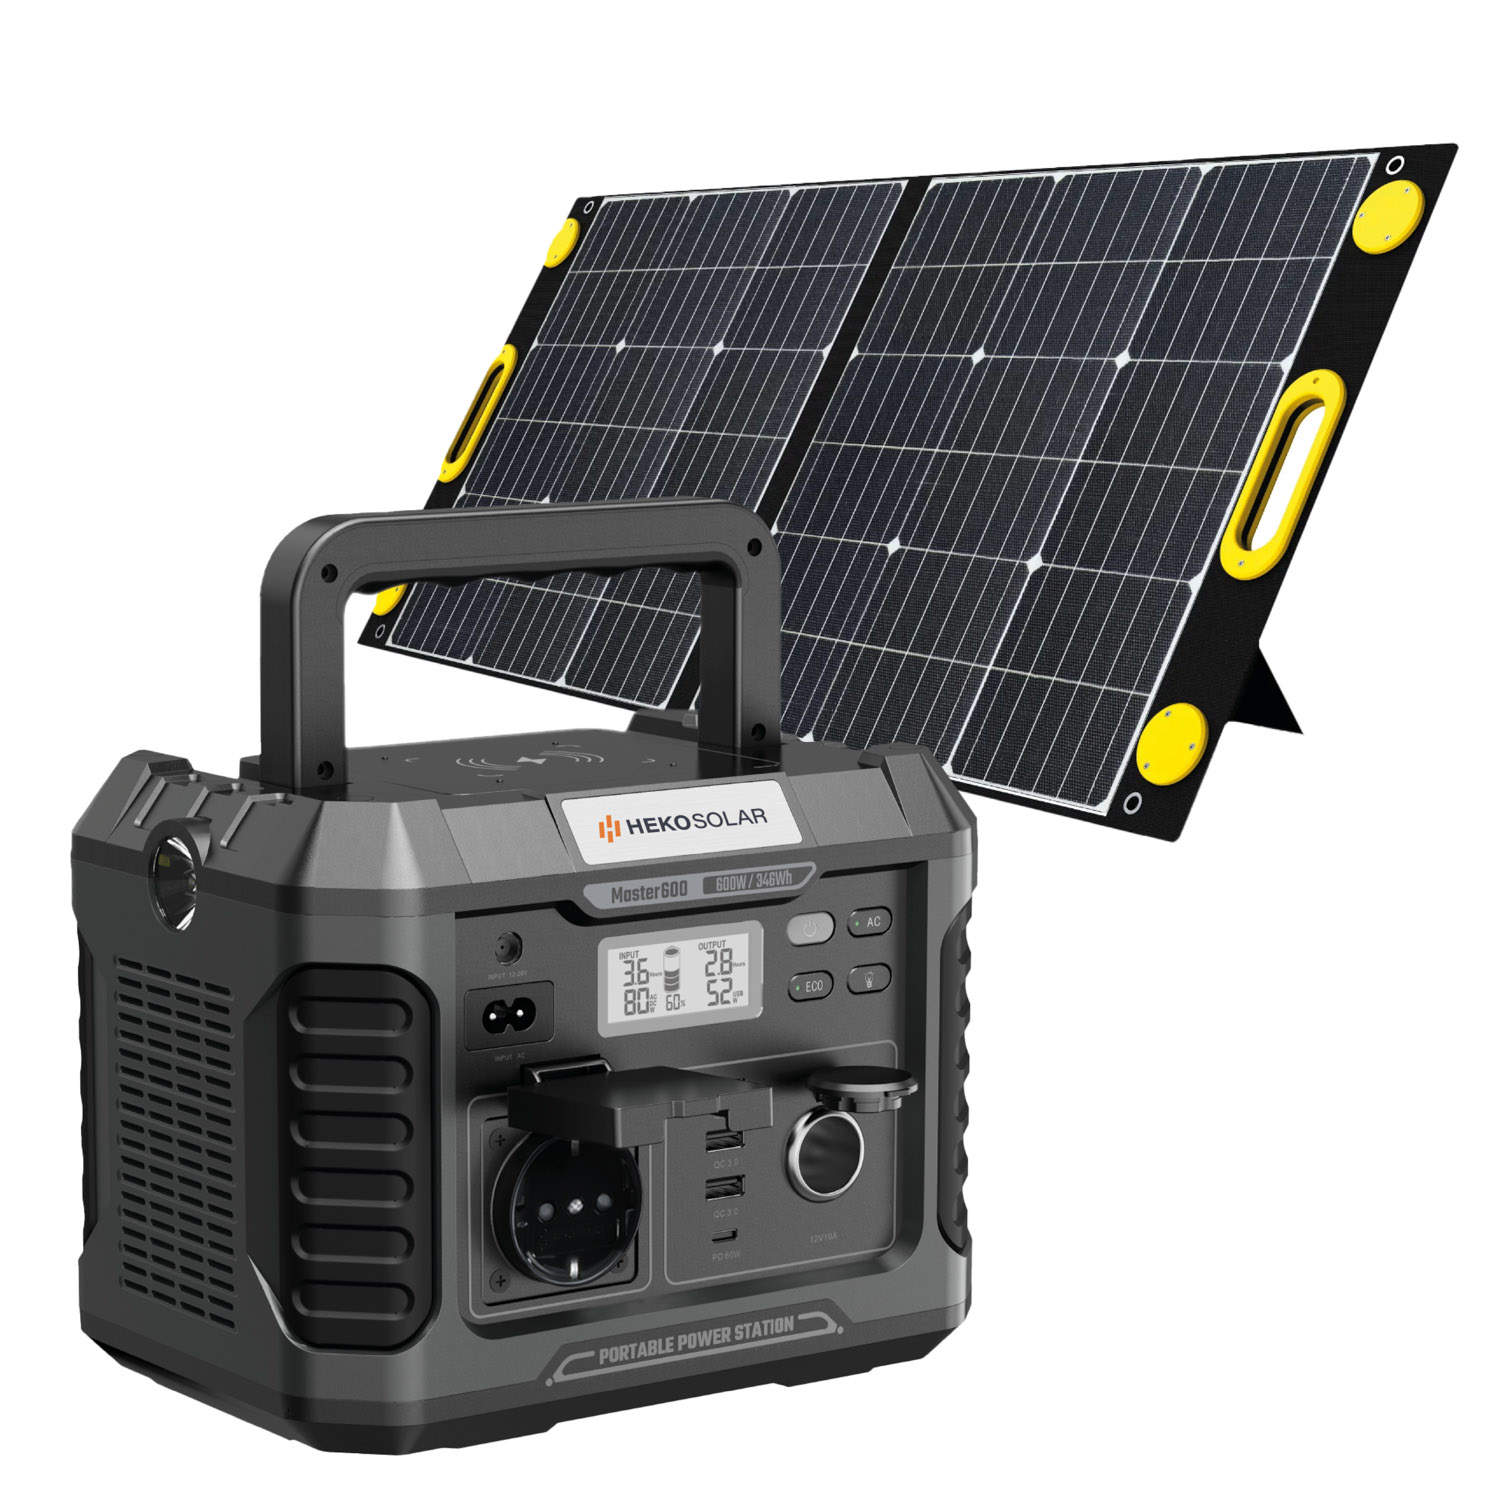 Heko Solar - Master 600 & Unfold 100-20 portable solar panel powerstation